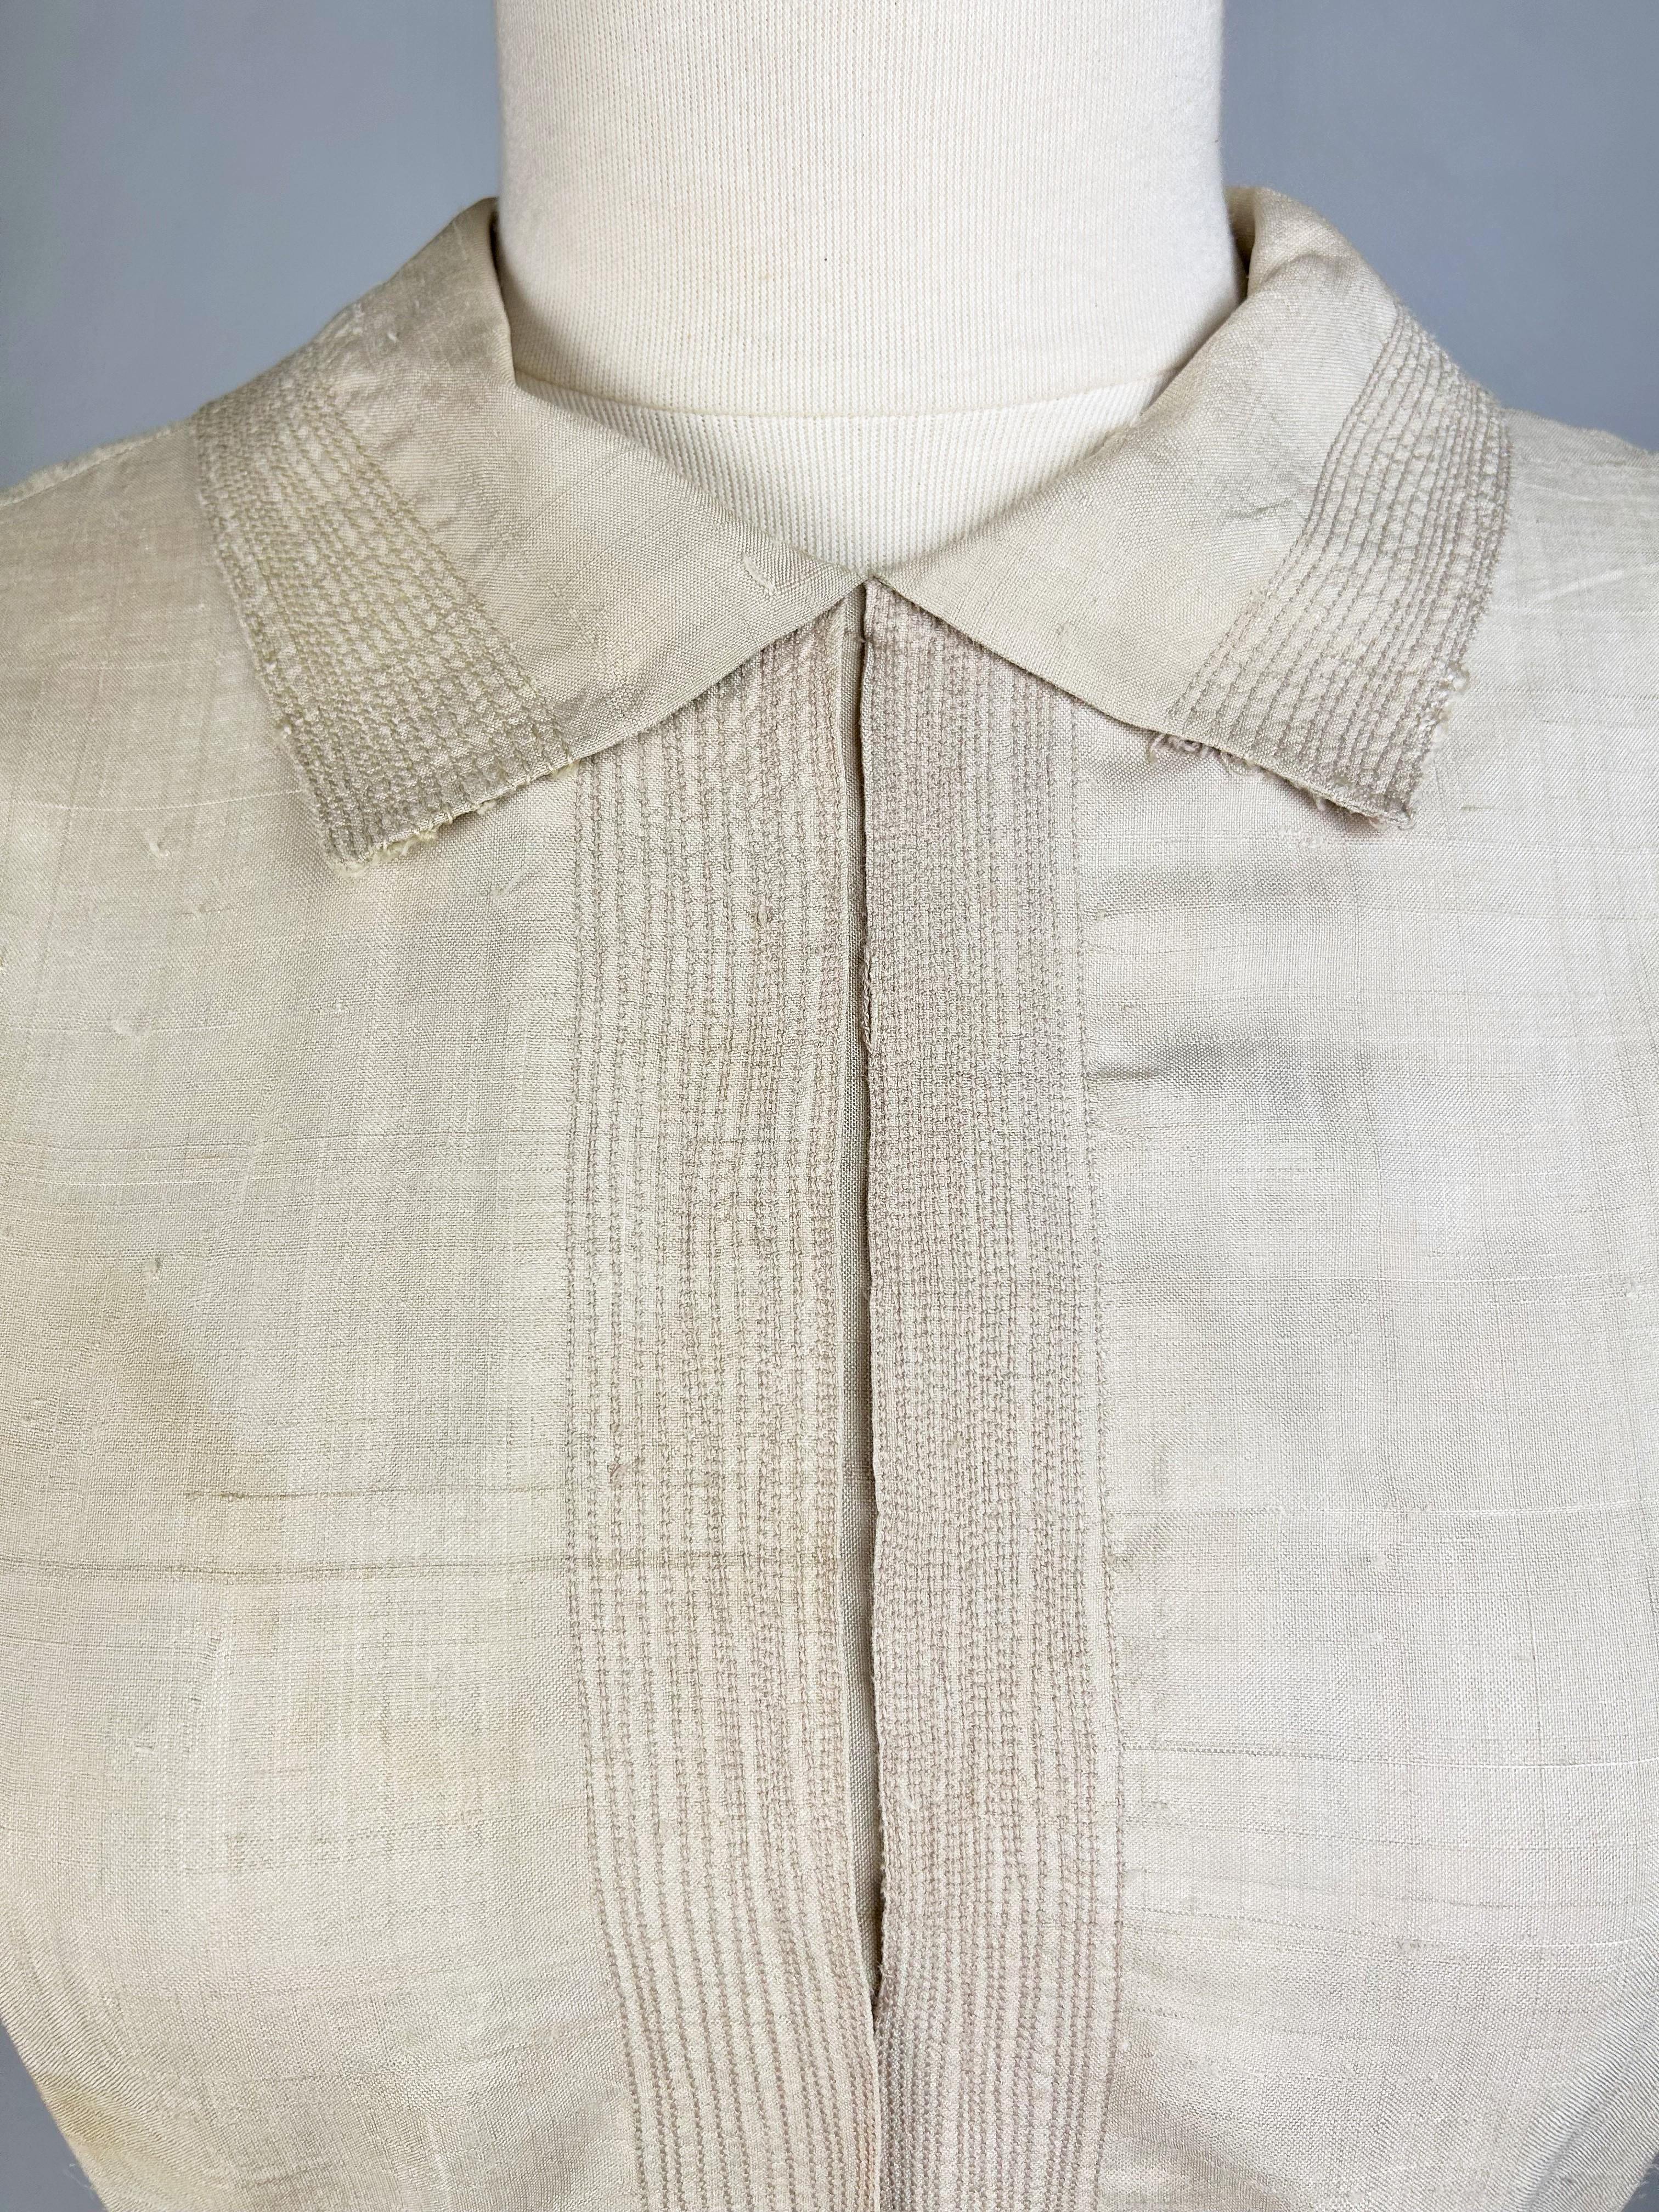 Unbleached wild silk summer dress - France Circa 1930-1940 For Sale 7